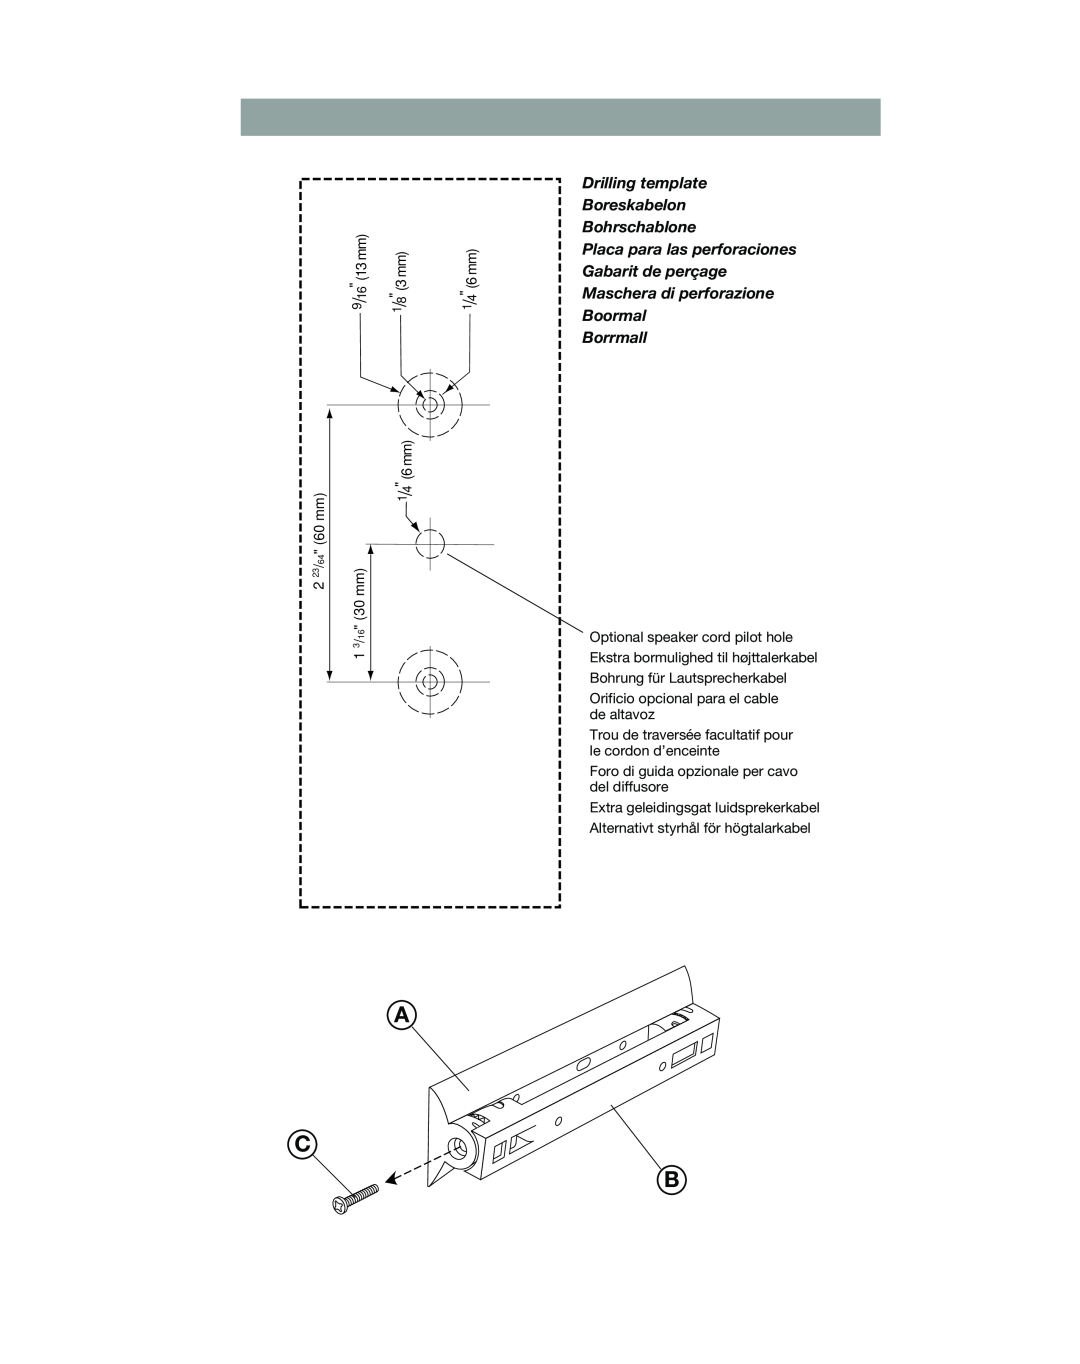 Bose VCS-10 manual A C B, Drilling template Boreskabelon Bohrschablone, Borrmall 